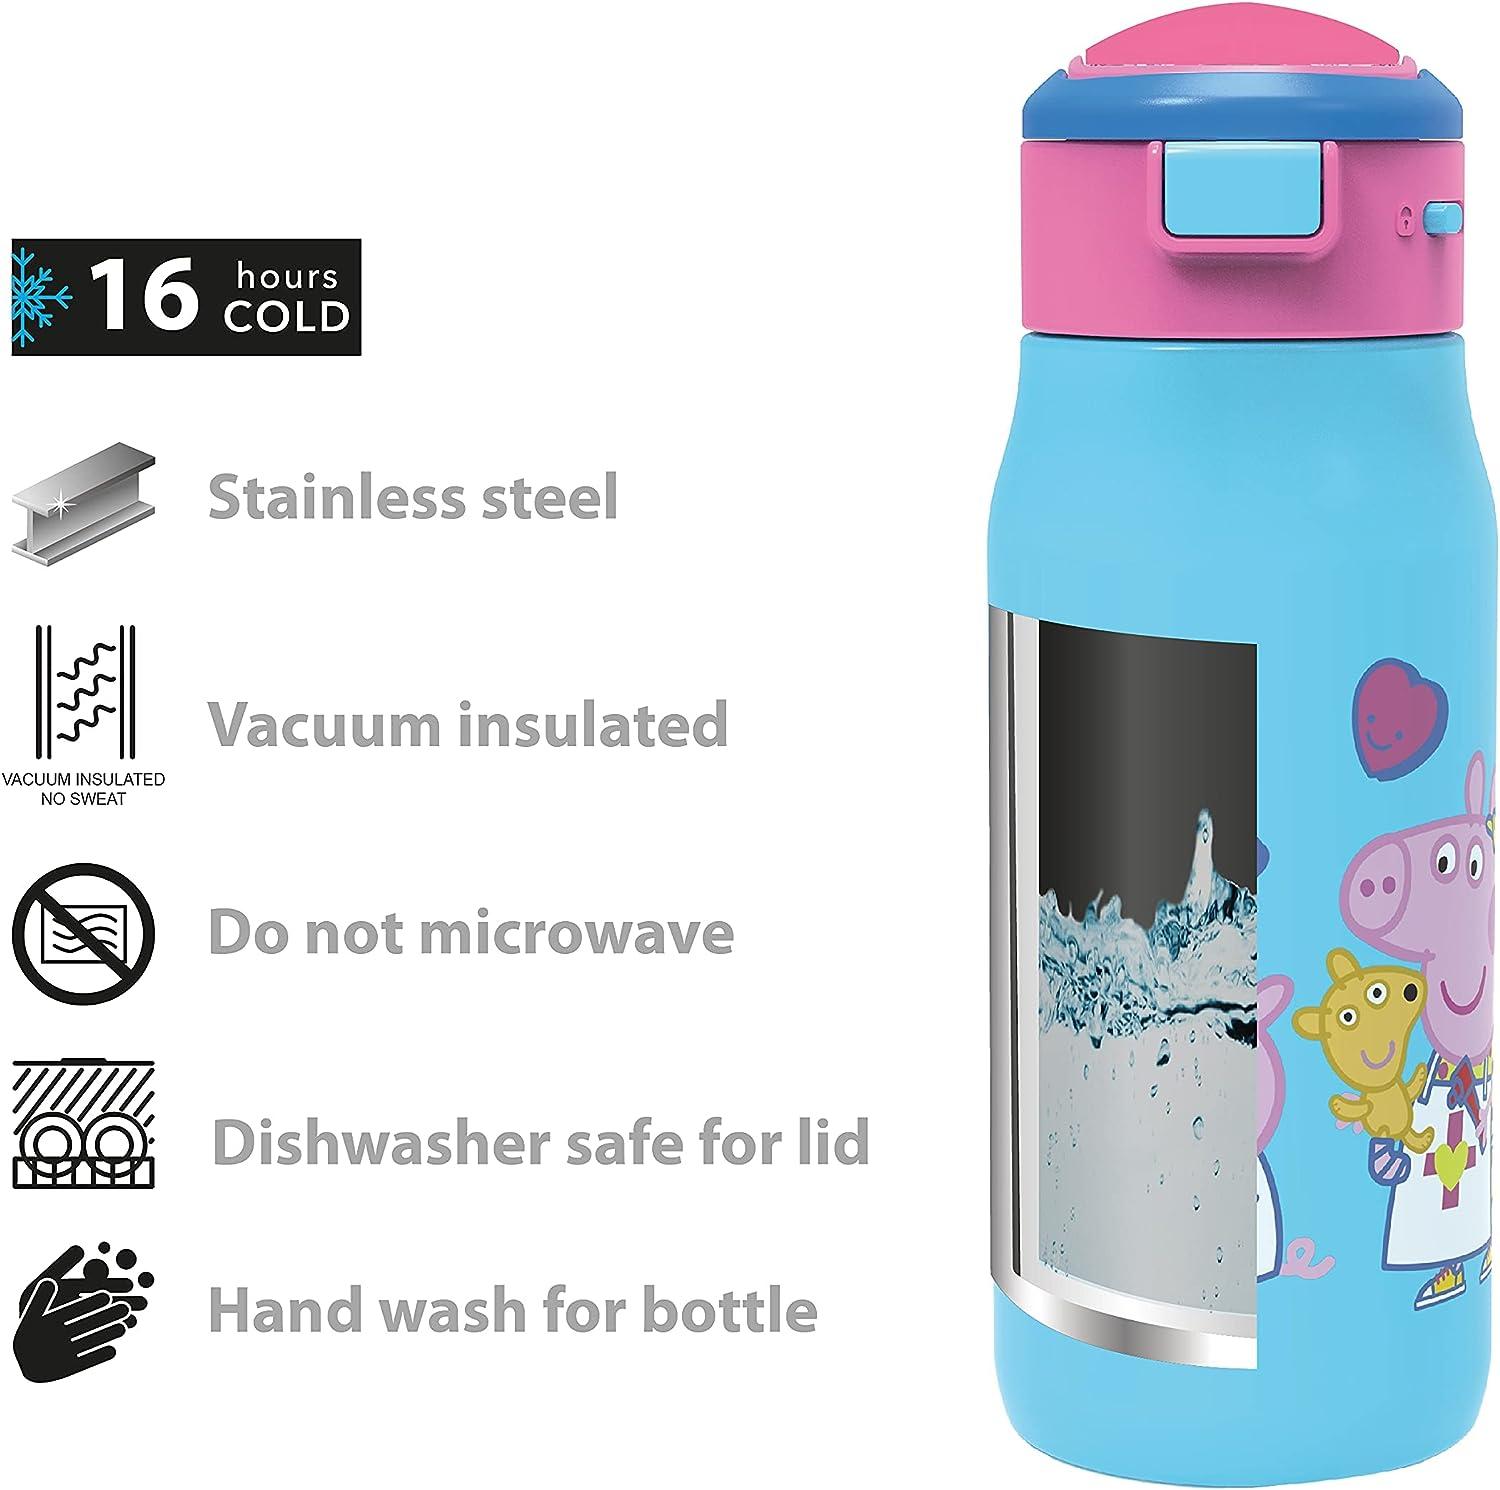 Zak Designs Peppa Pig Kids Water Bottle For School or Travel 13.5